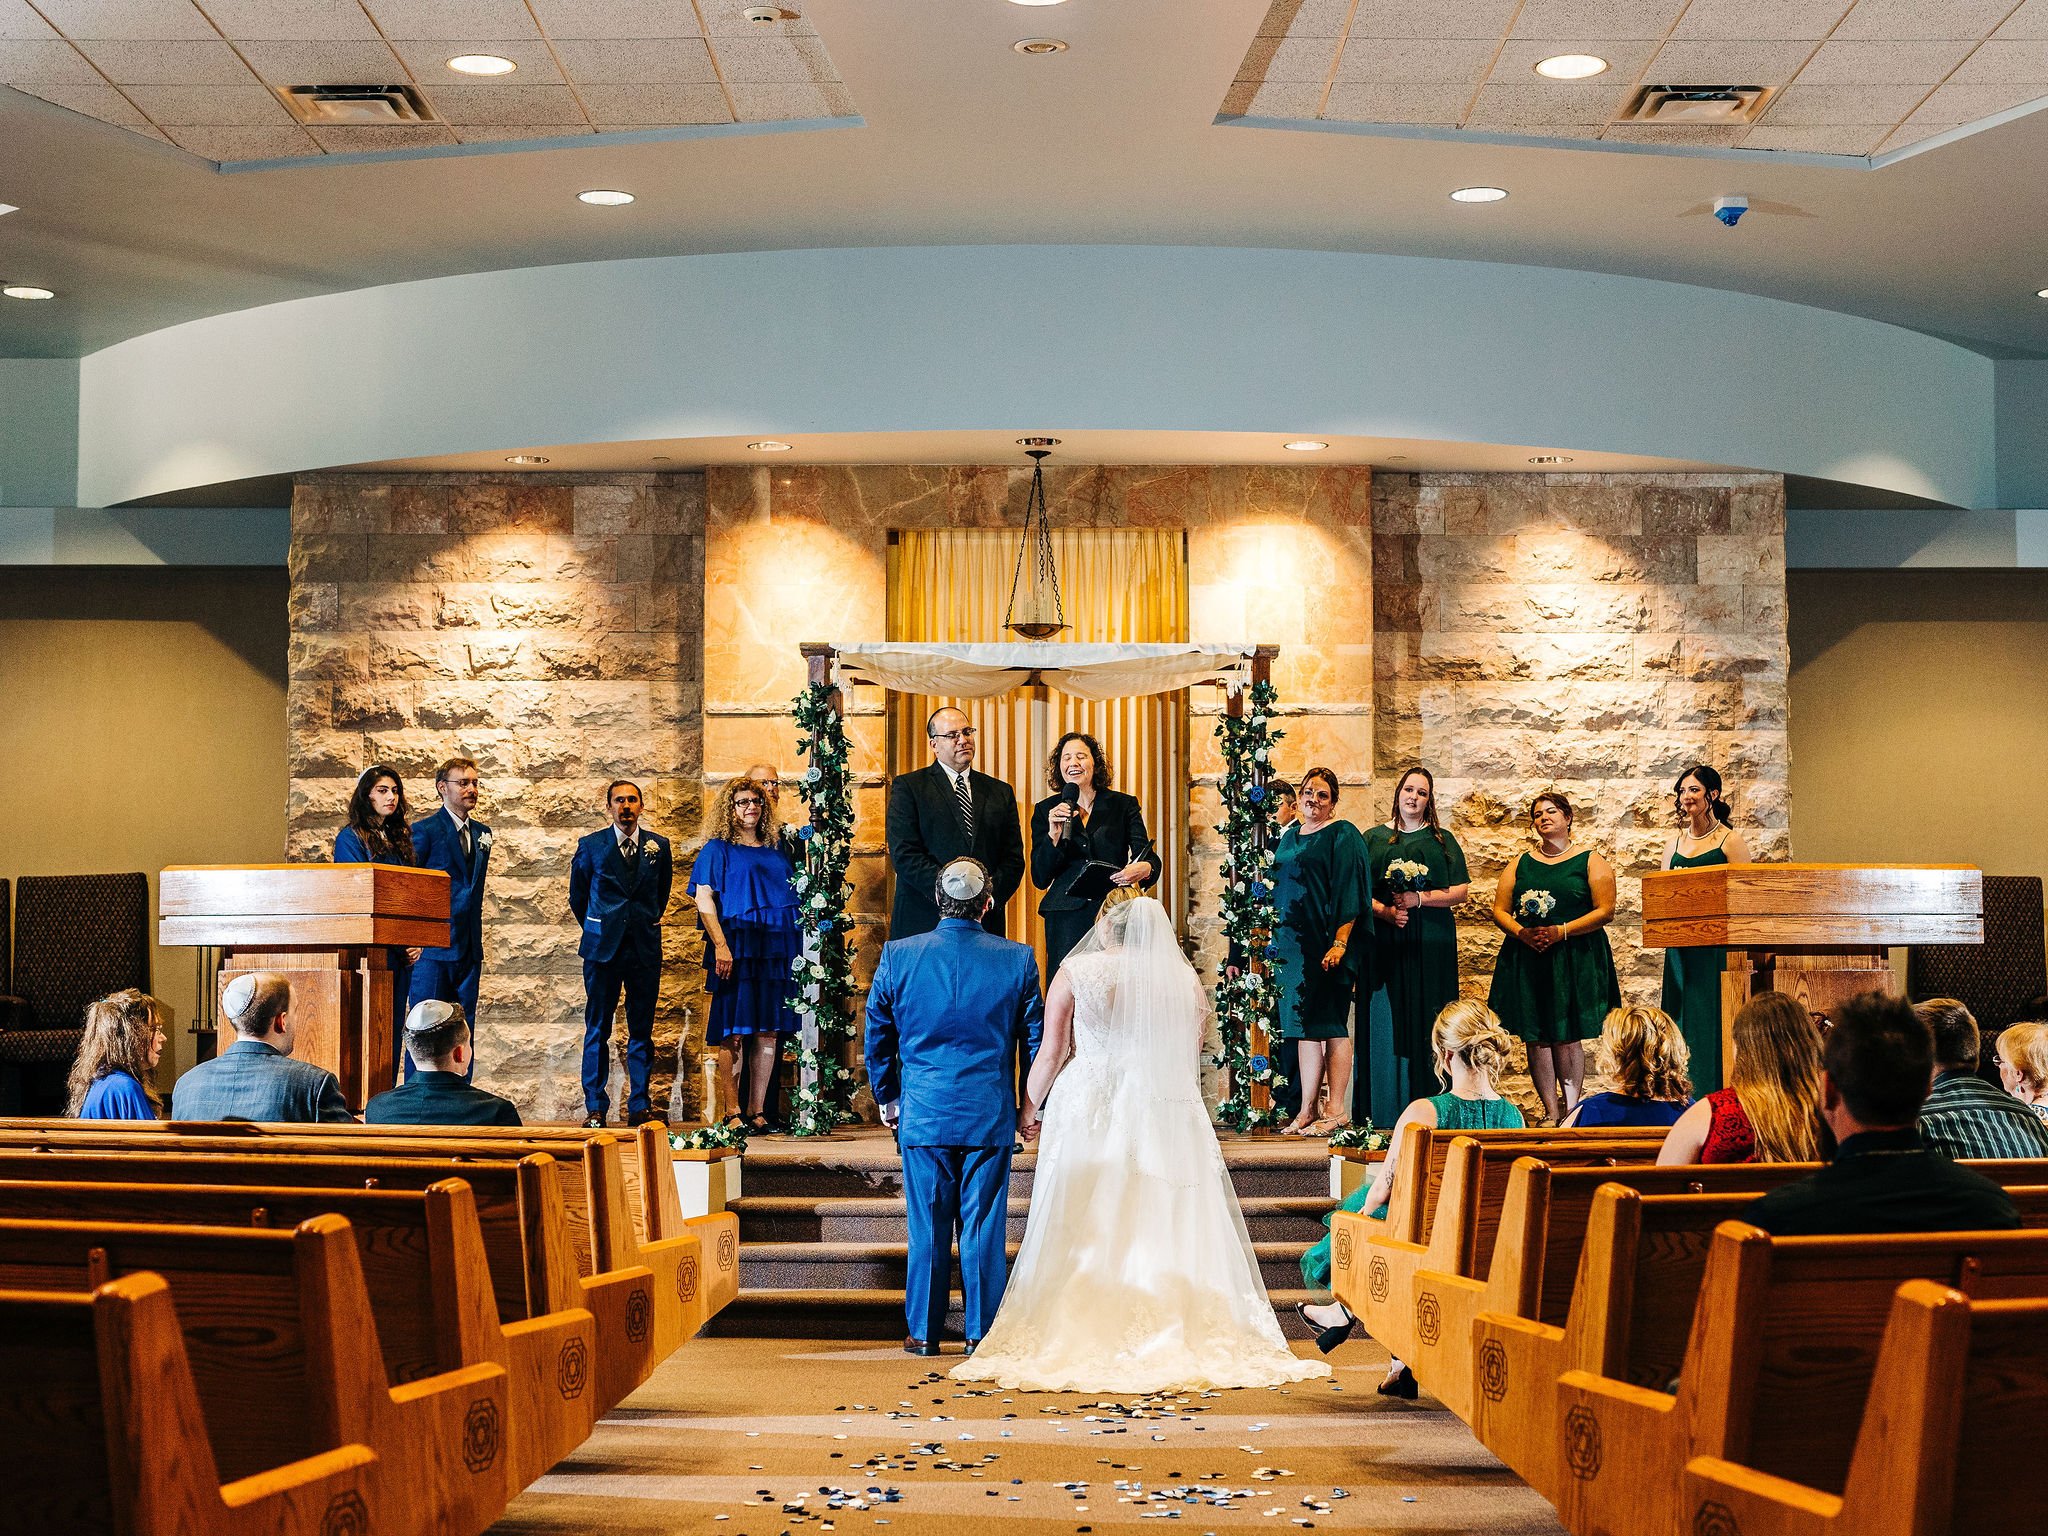 Beth-El-Synagogue-Jewish-Wedding-Pittsburgh-Maya-Elaine-Photography-223.jpg